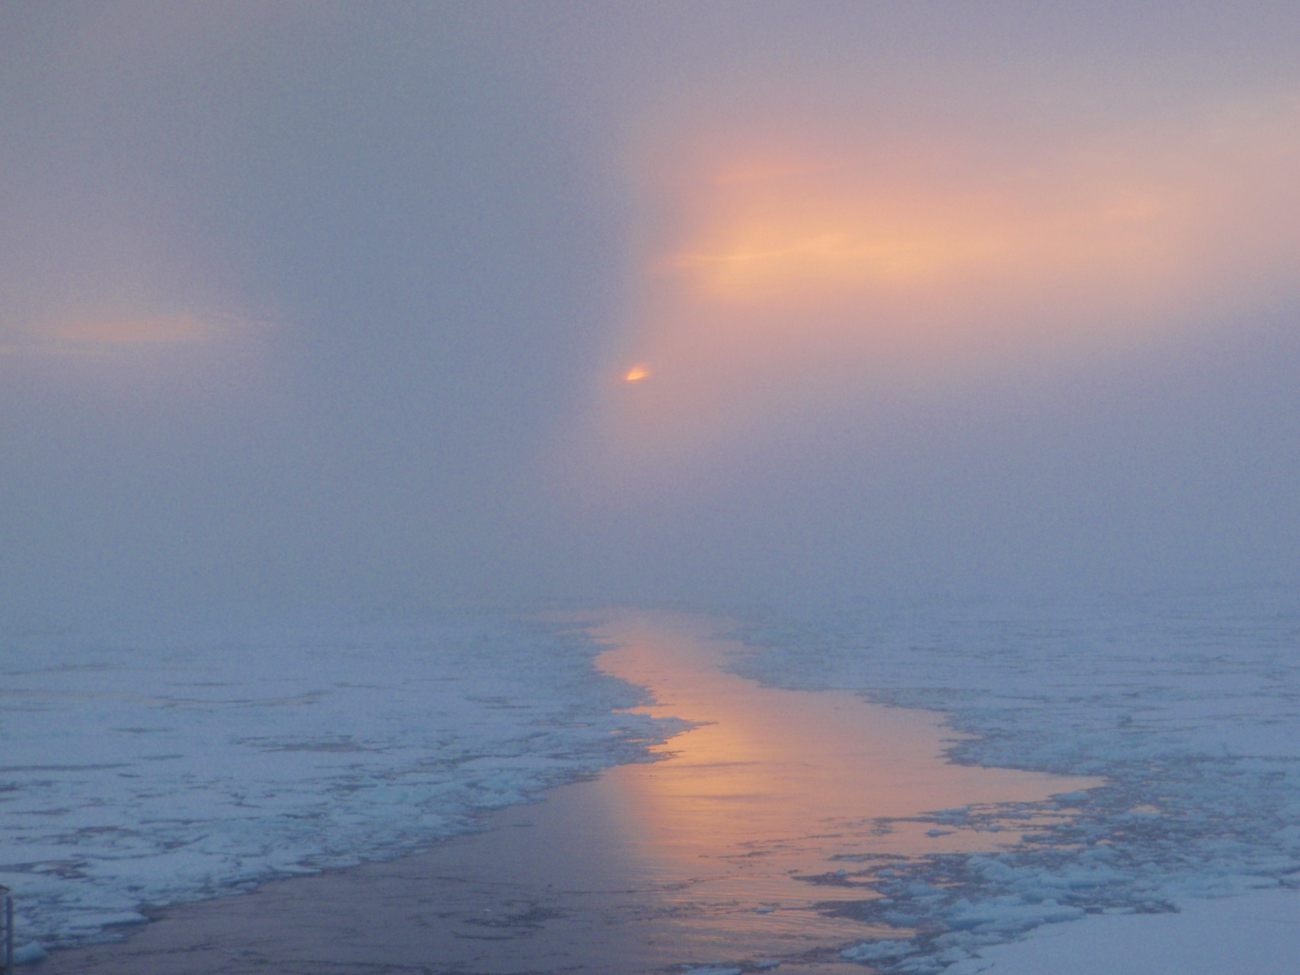 A glimpse of sun illuminating a lead through ice floes